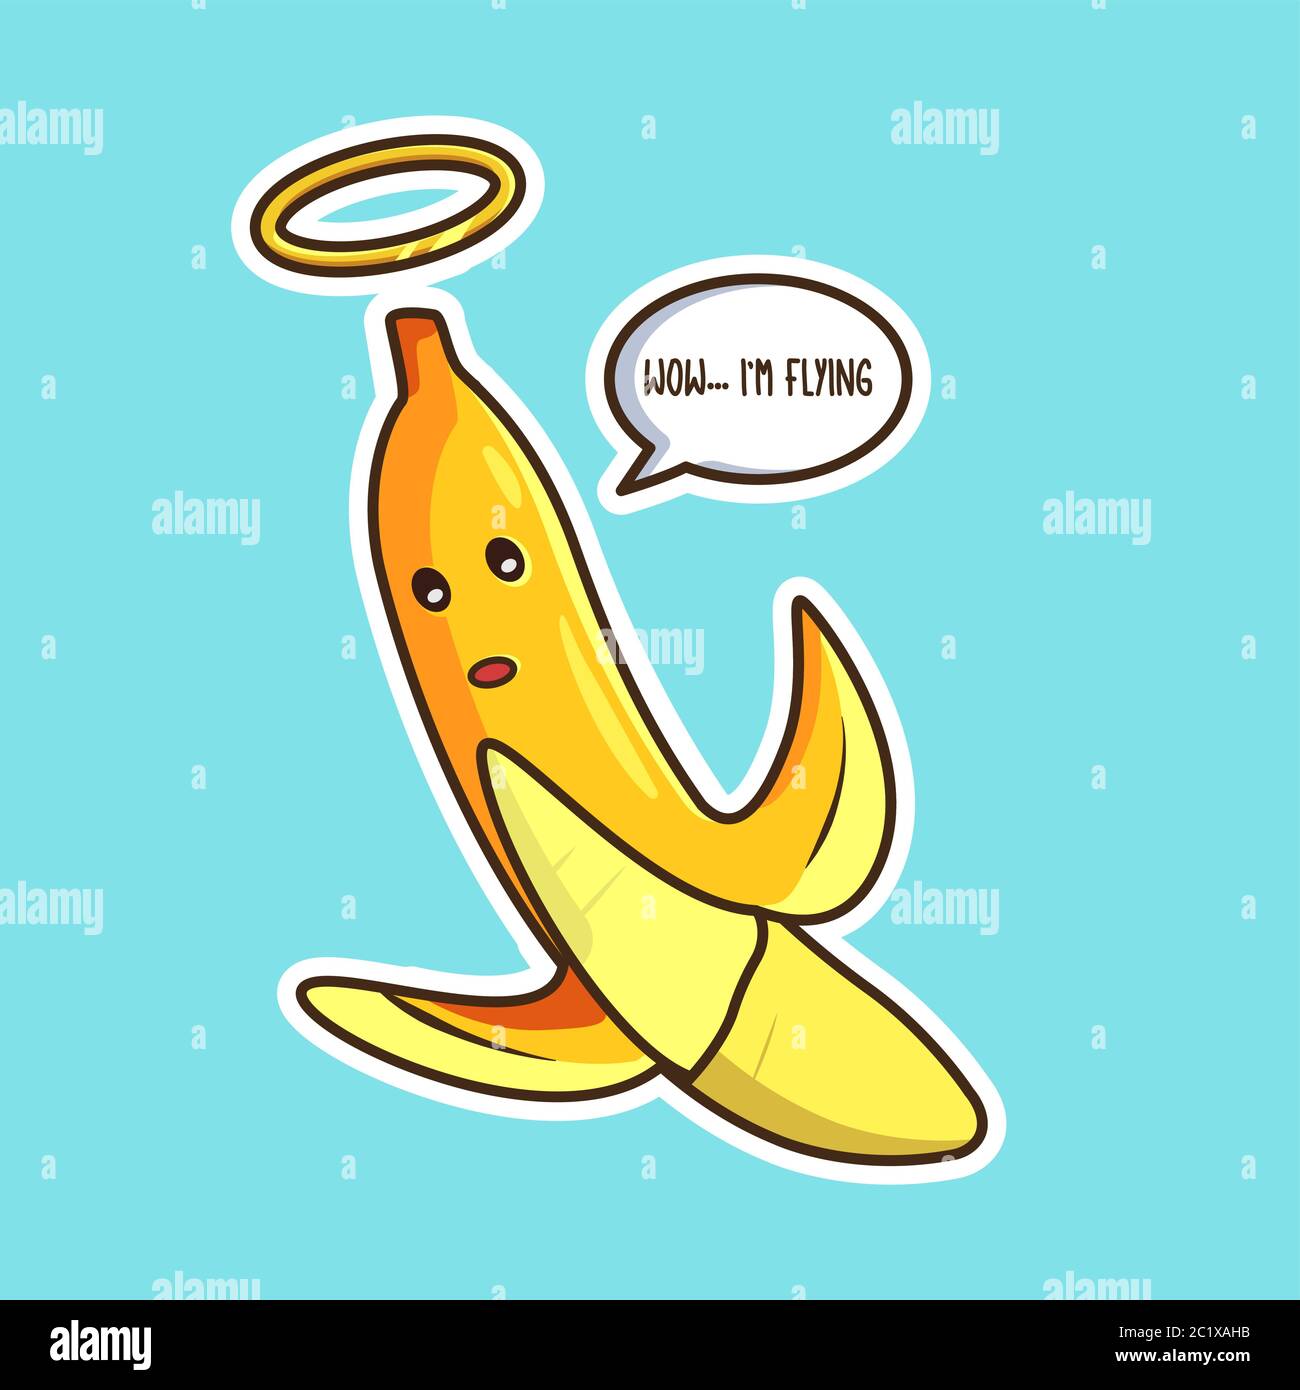 Flying Banana Vector Illustration. Flat Cartoon Style Stock Vector